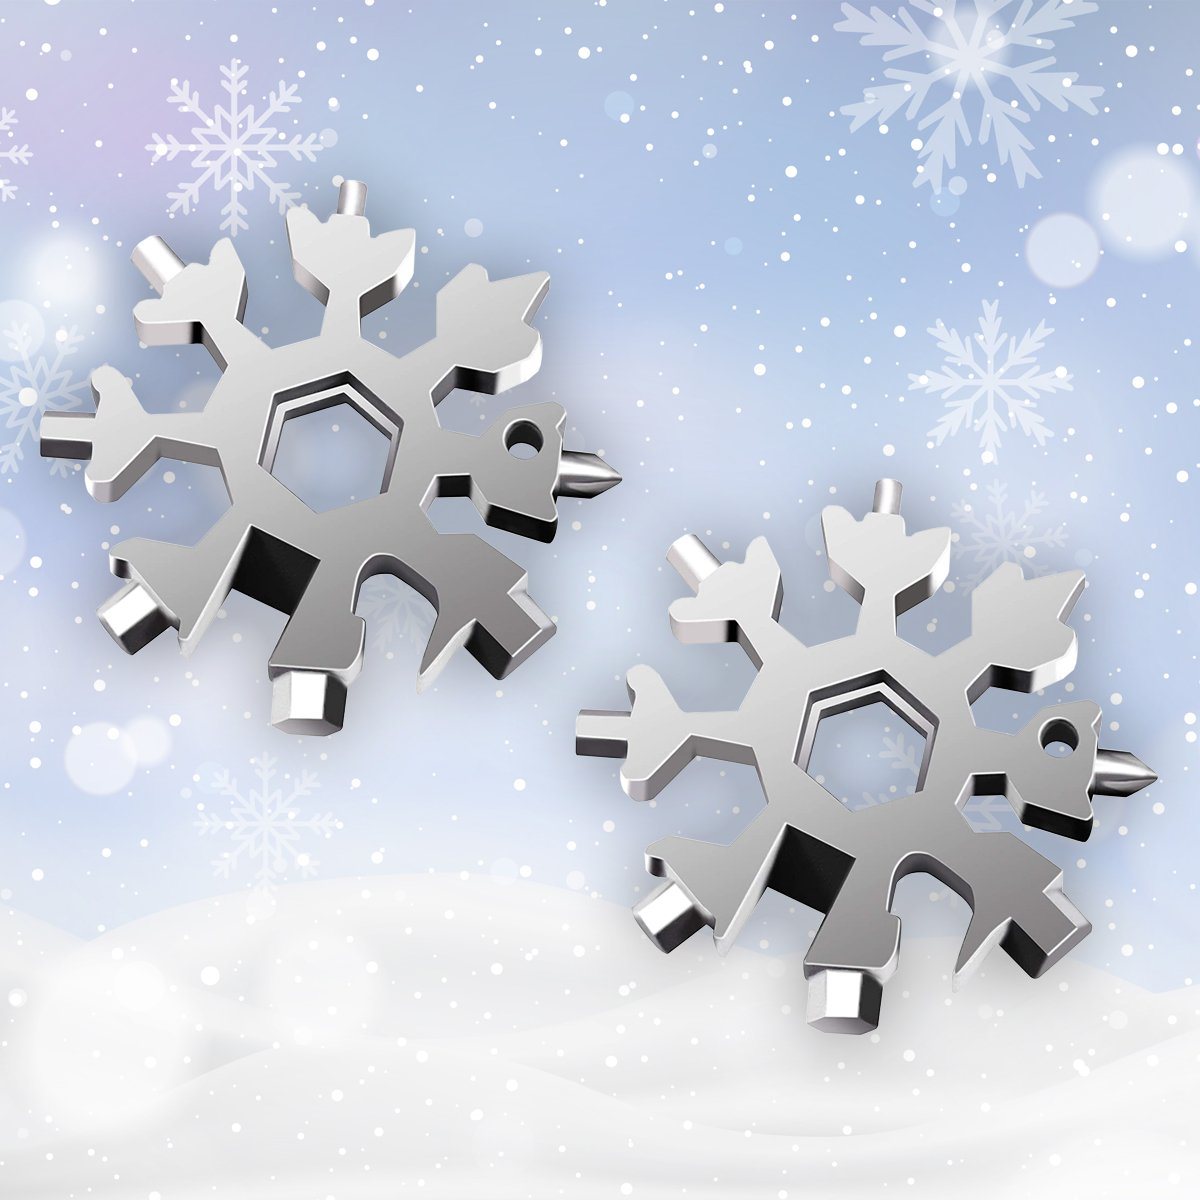 Amenitee 18-in-1 snowflakes multi-tool MULTITOOLS smartsaker silver*2 